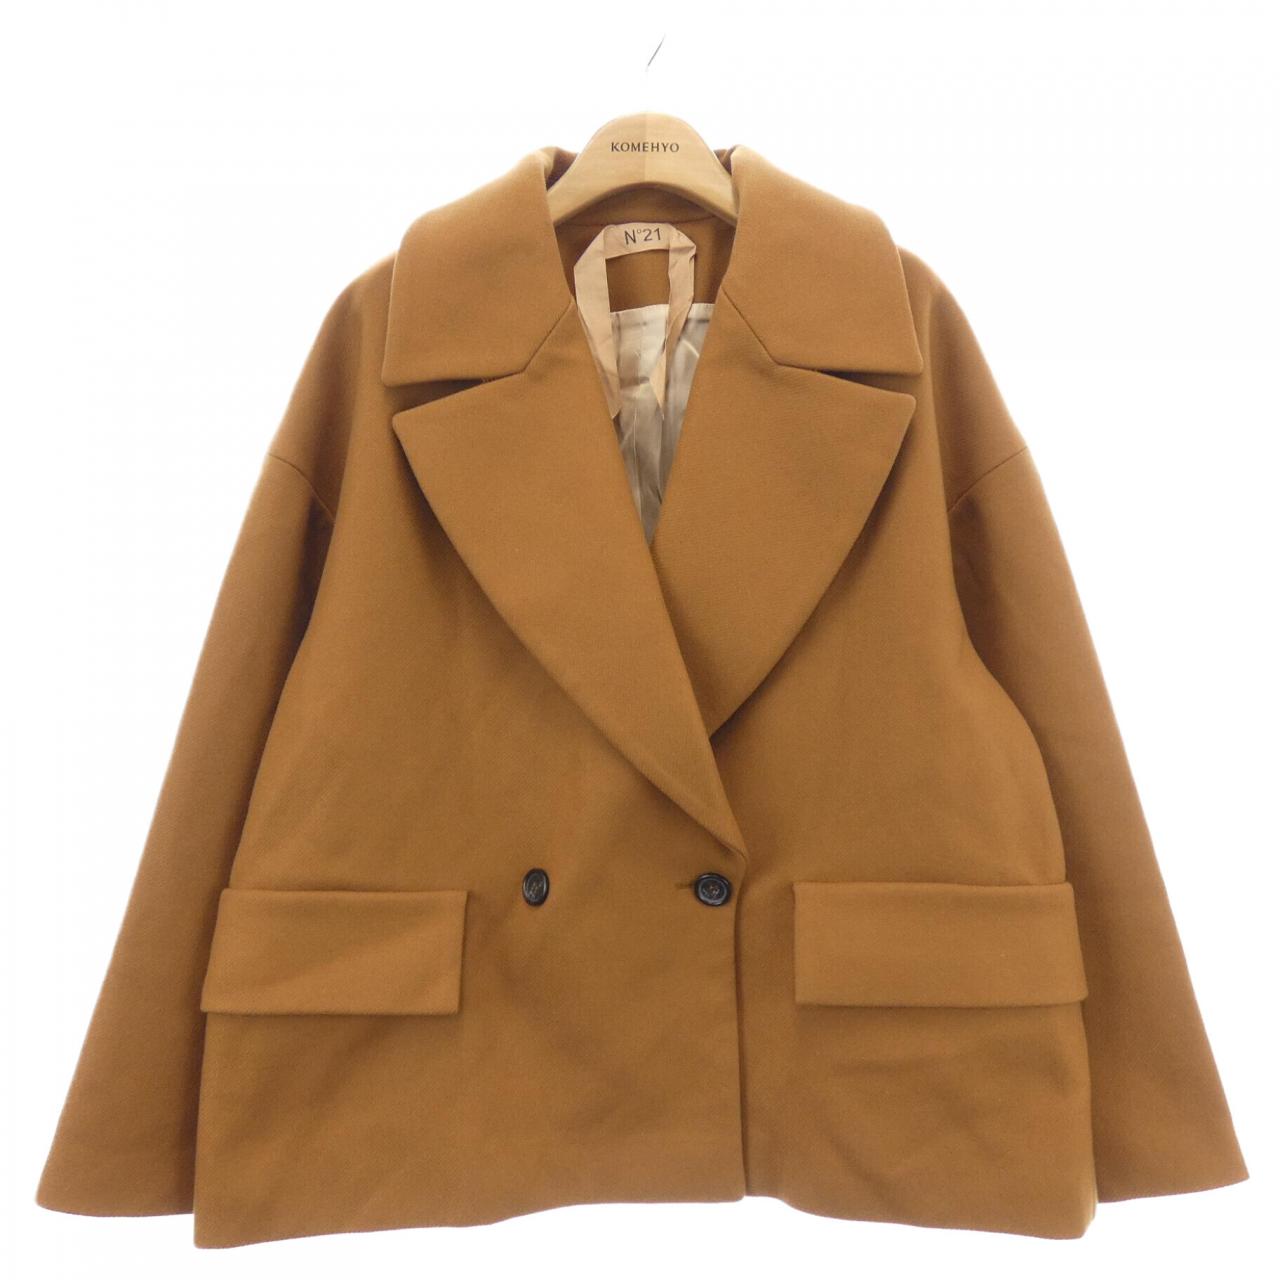 KOMEHYO|N°21 N°21 Coat|N°21|Women's Fashion|Outer Jacket|Coat 